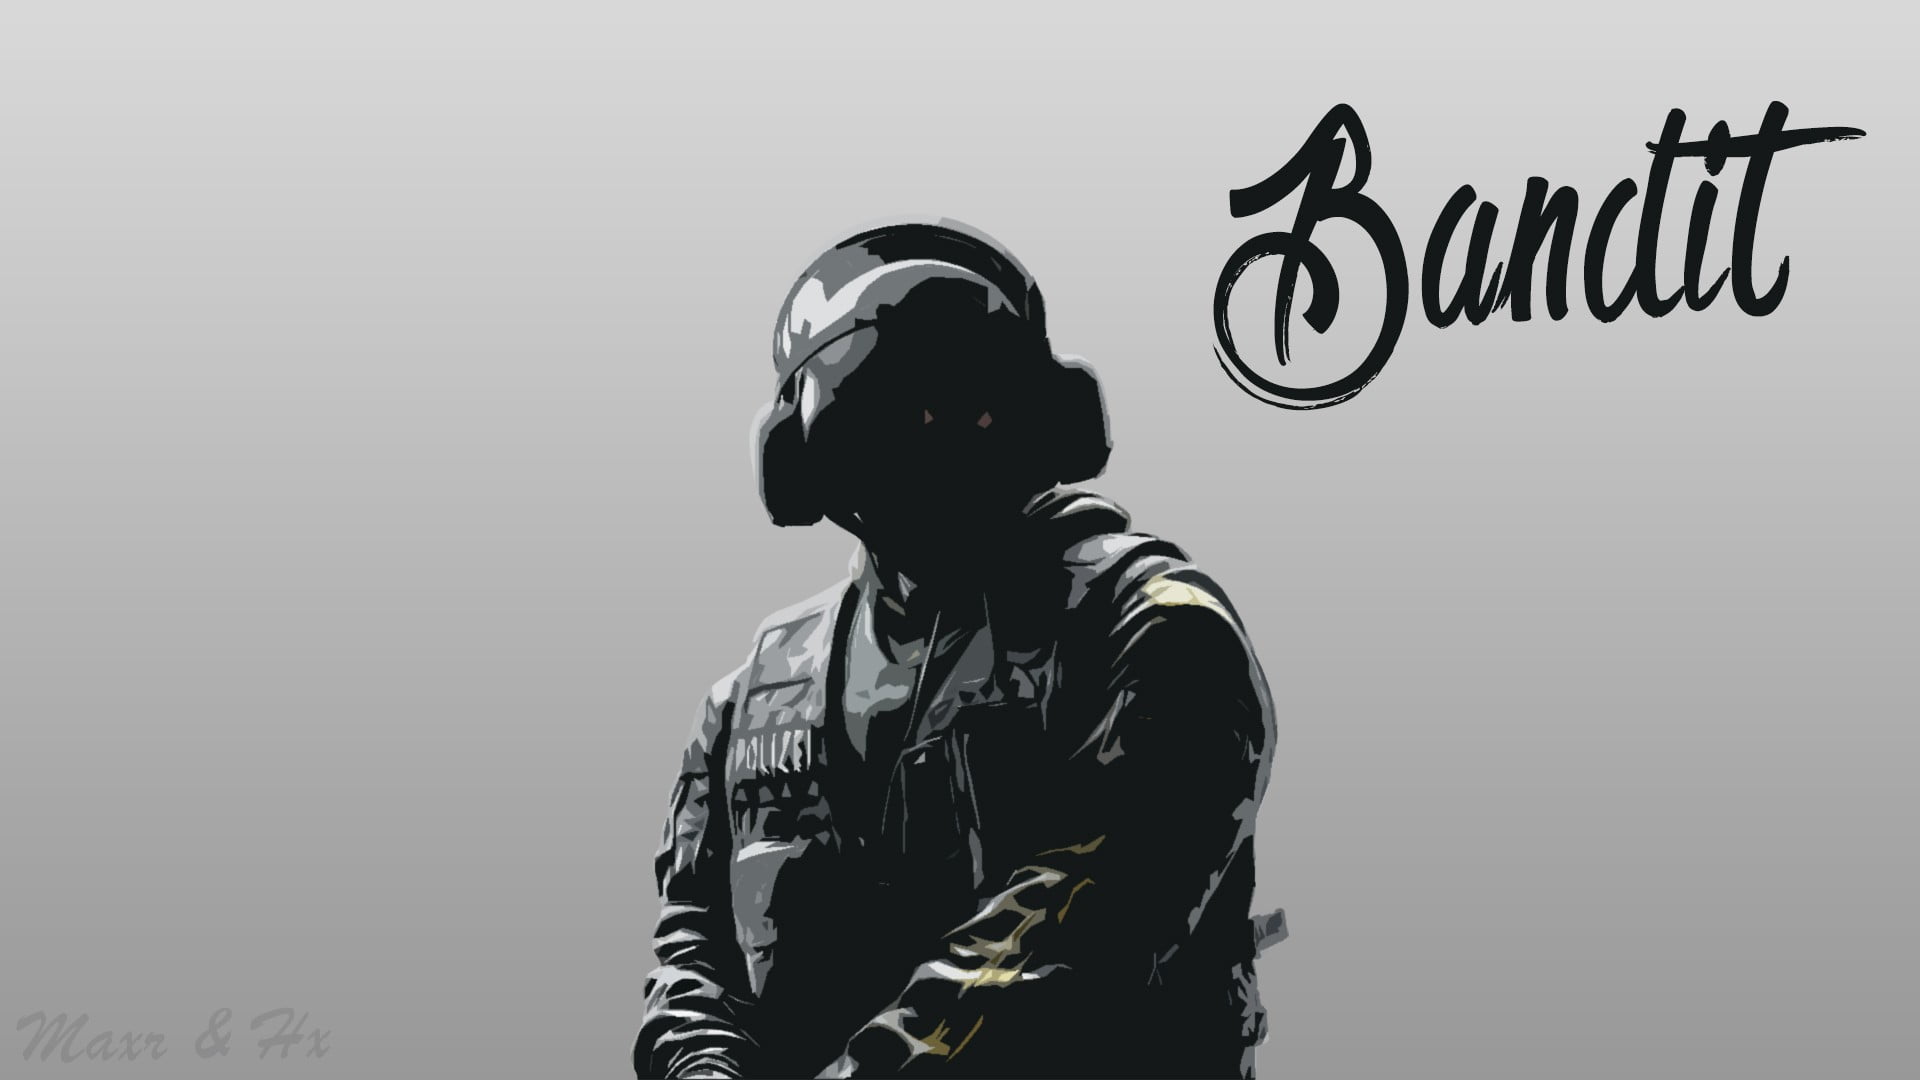 black headphones with Bandit text overlay, Rainbow Six: Siege, Bandit